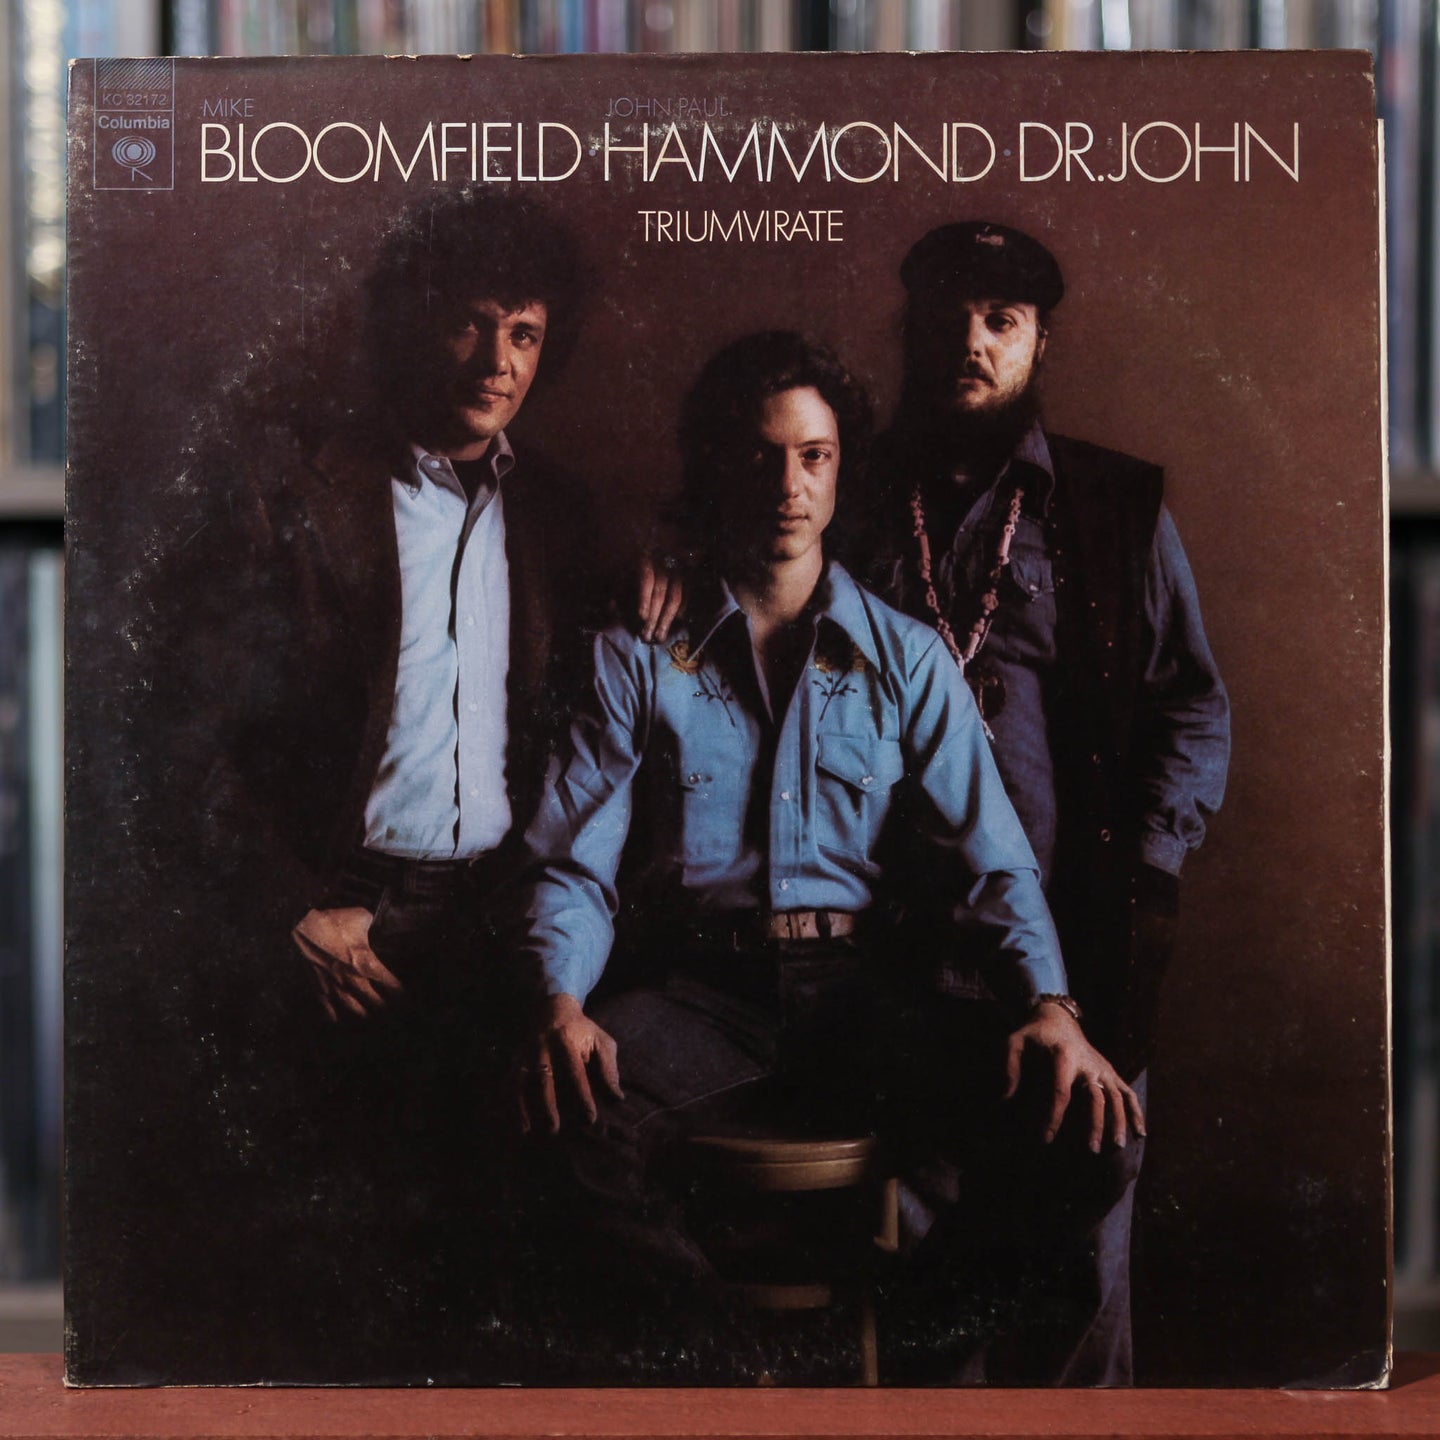 Mike Bloomfield / John Paul Hammond / Dr. John - Triumvirate - 1973 Columbia, VG+/VG+